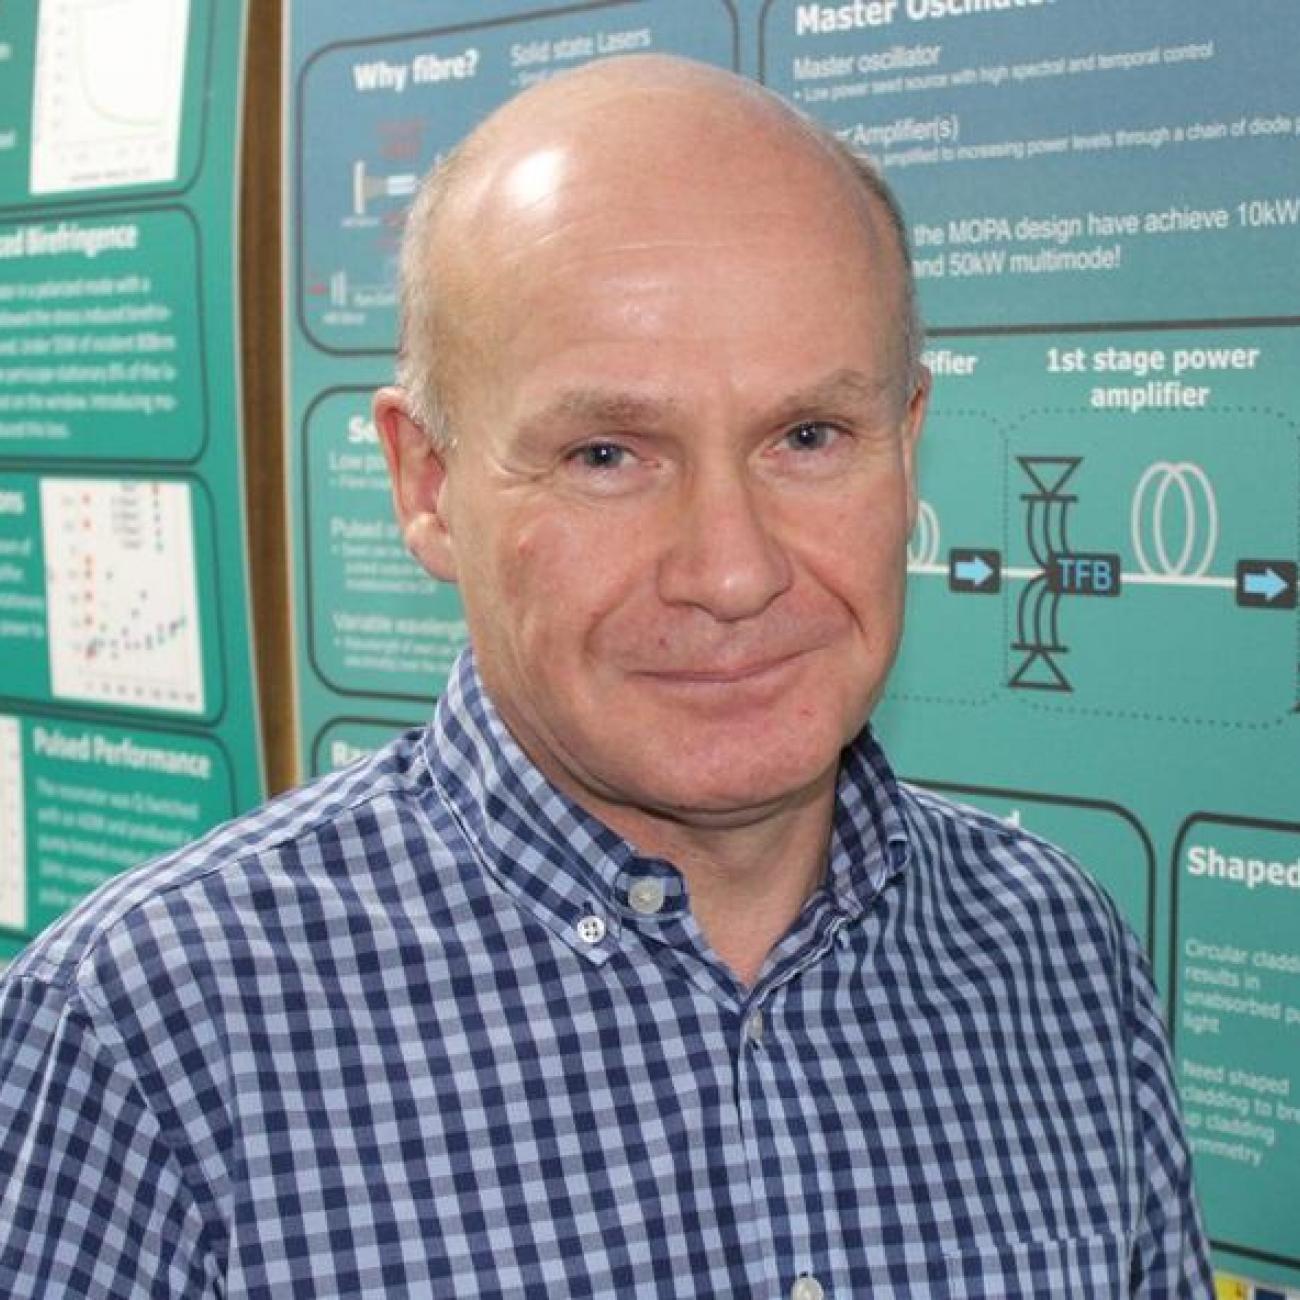 Professor Andy Clarkson